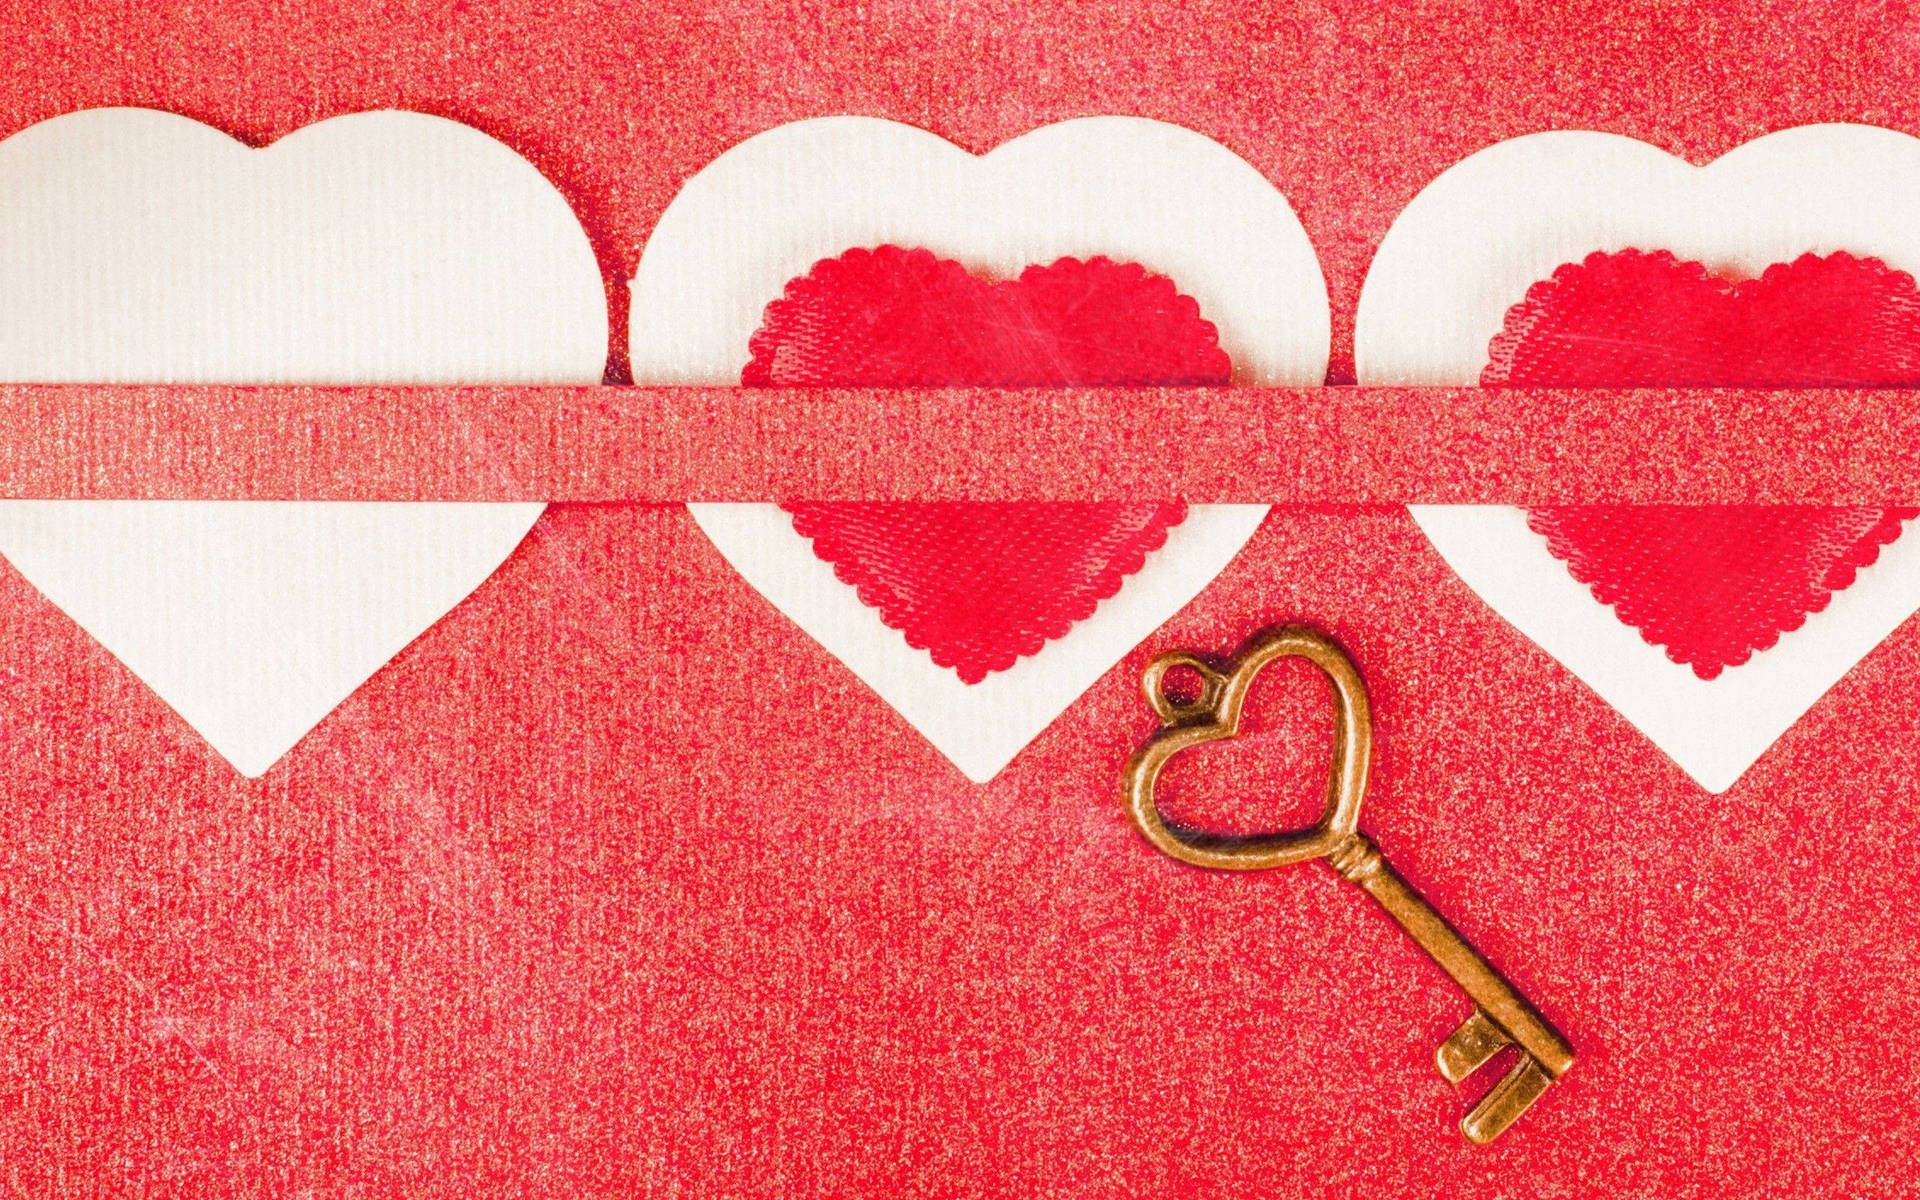 cute valentines day wallpaper tumblr